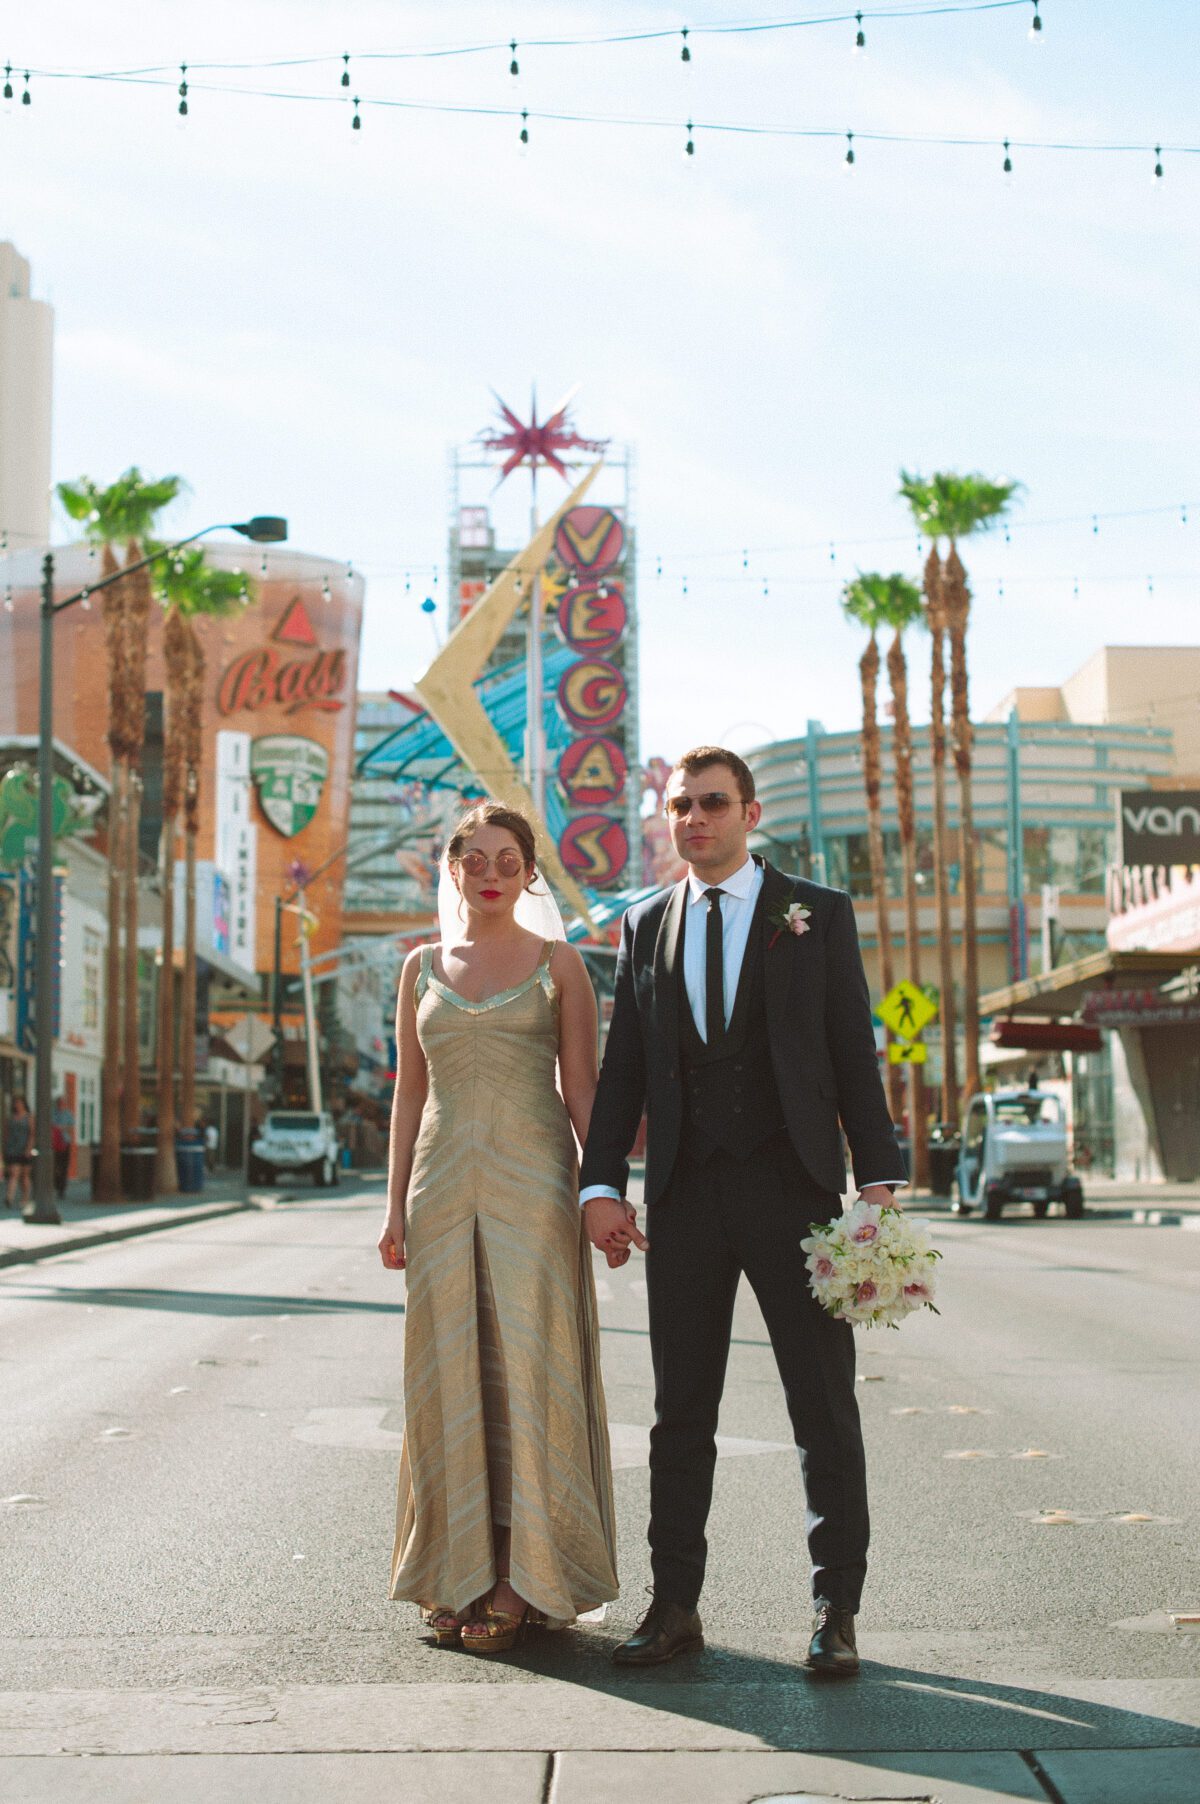 Las Vegas Elopement photographer captures a stylish couple posing in front of a vintage Vegas sign.